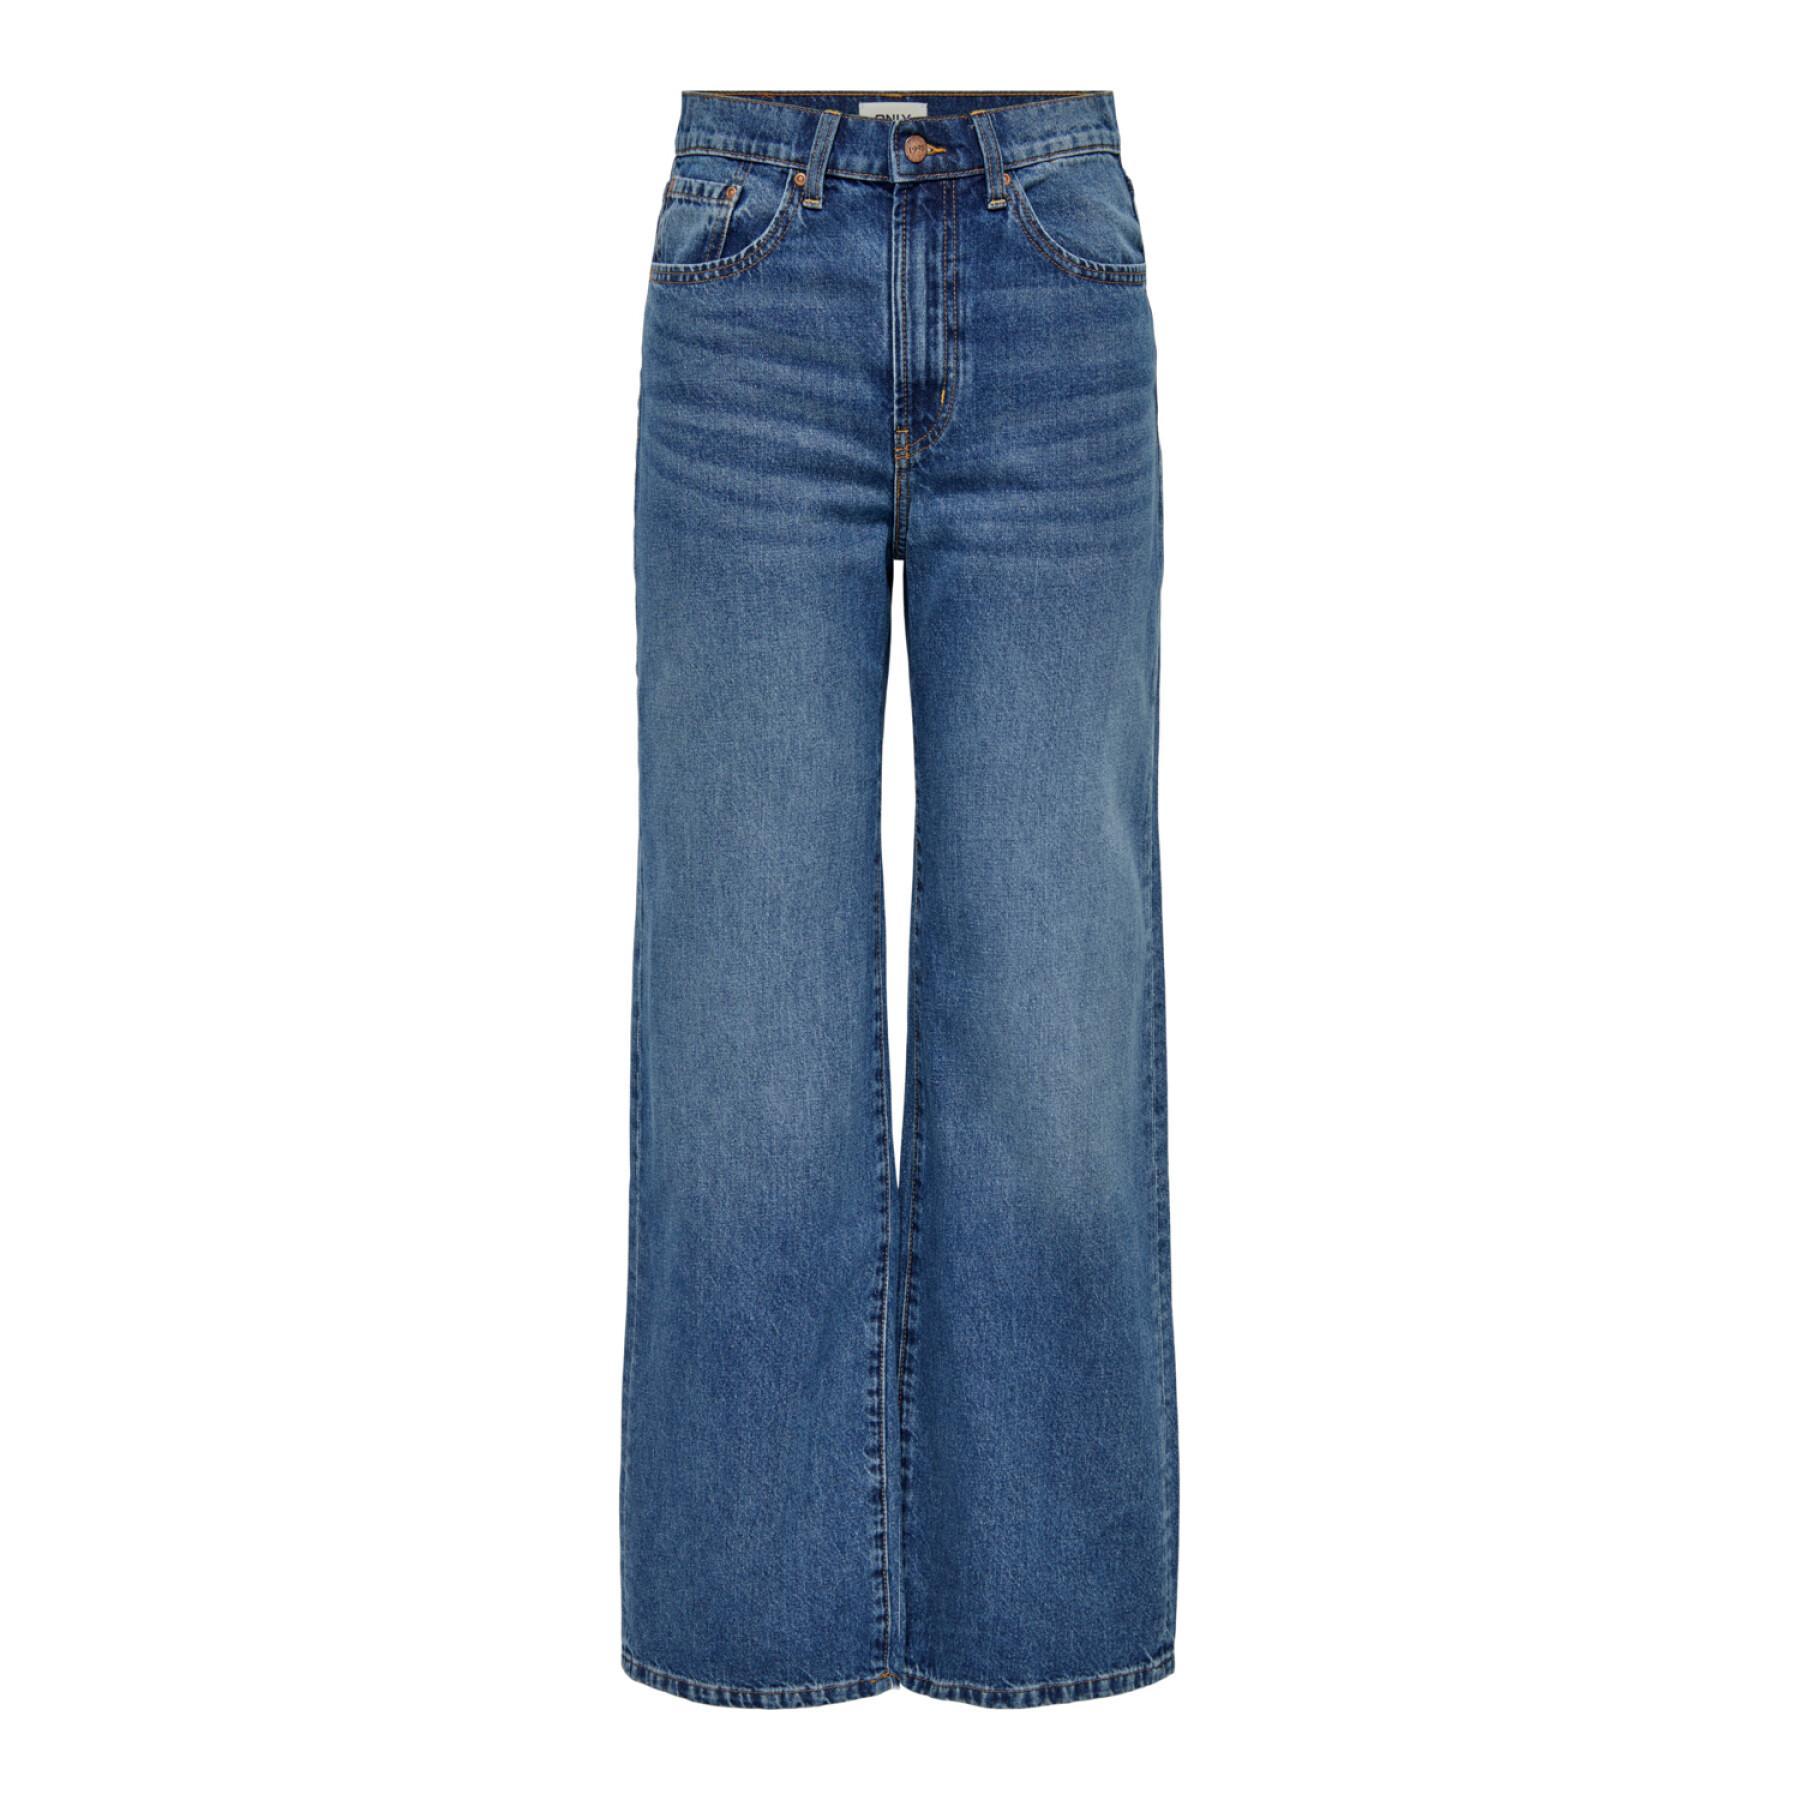 Women's jeans Only Onlhope add465